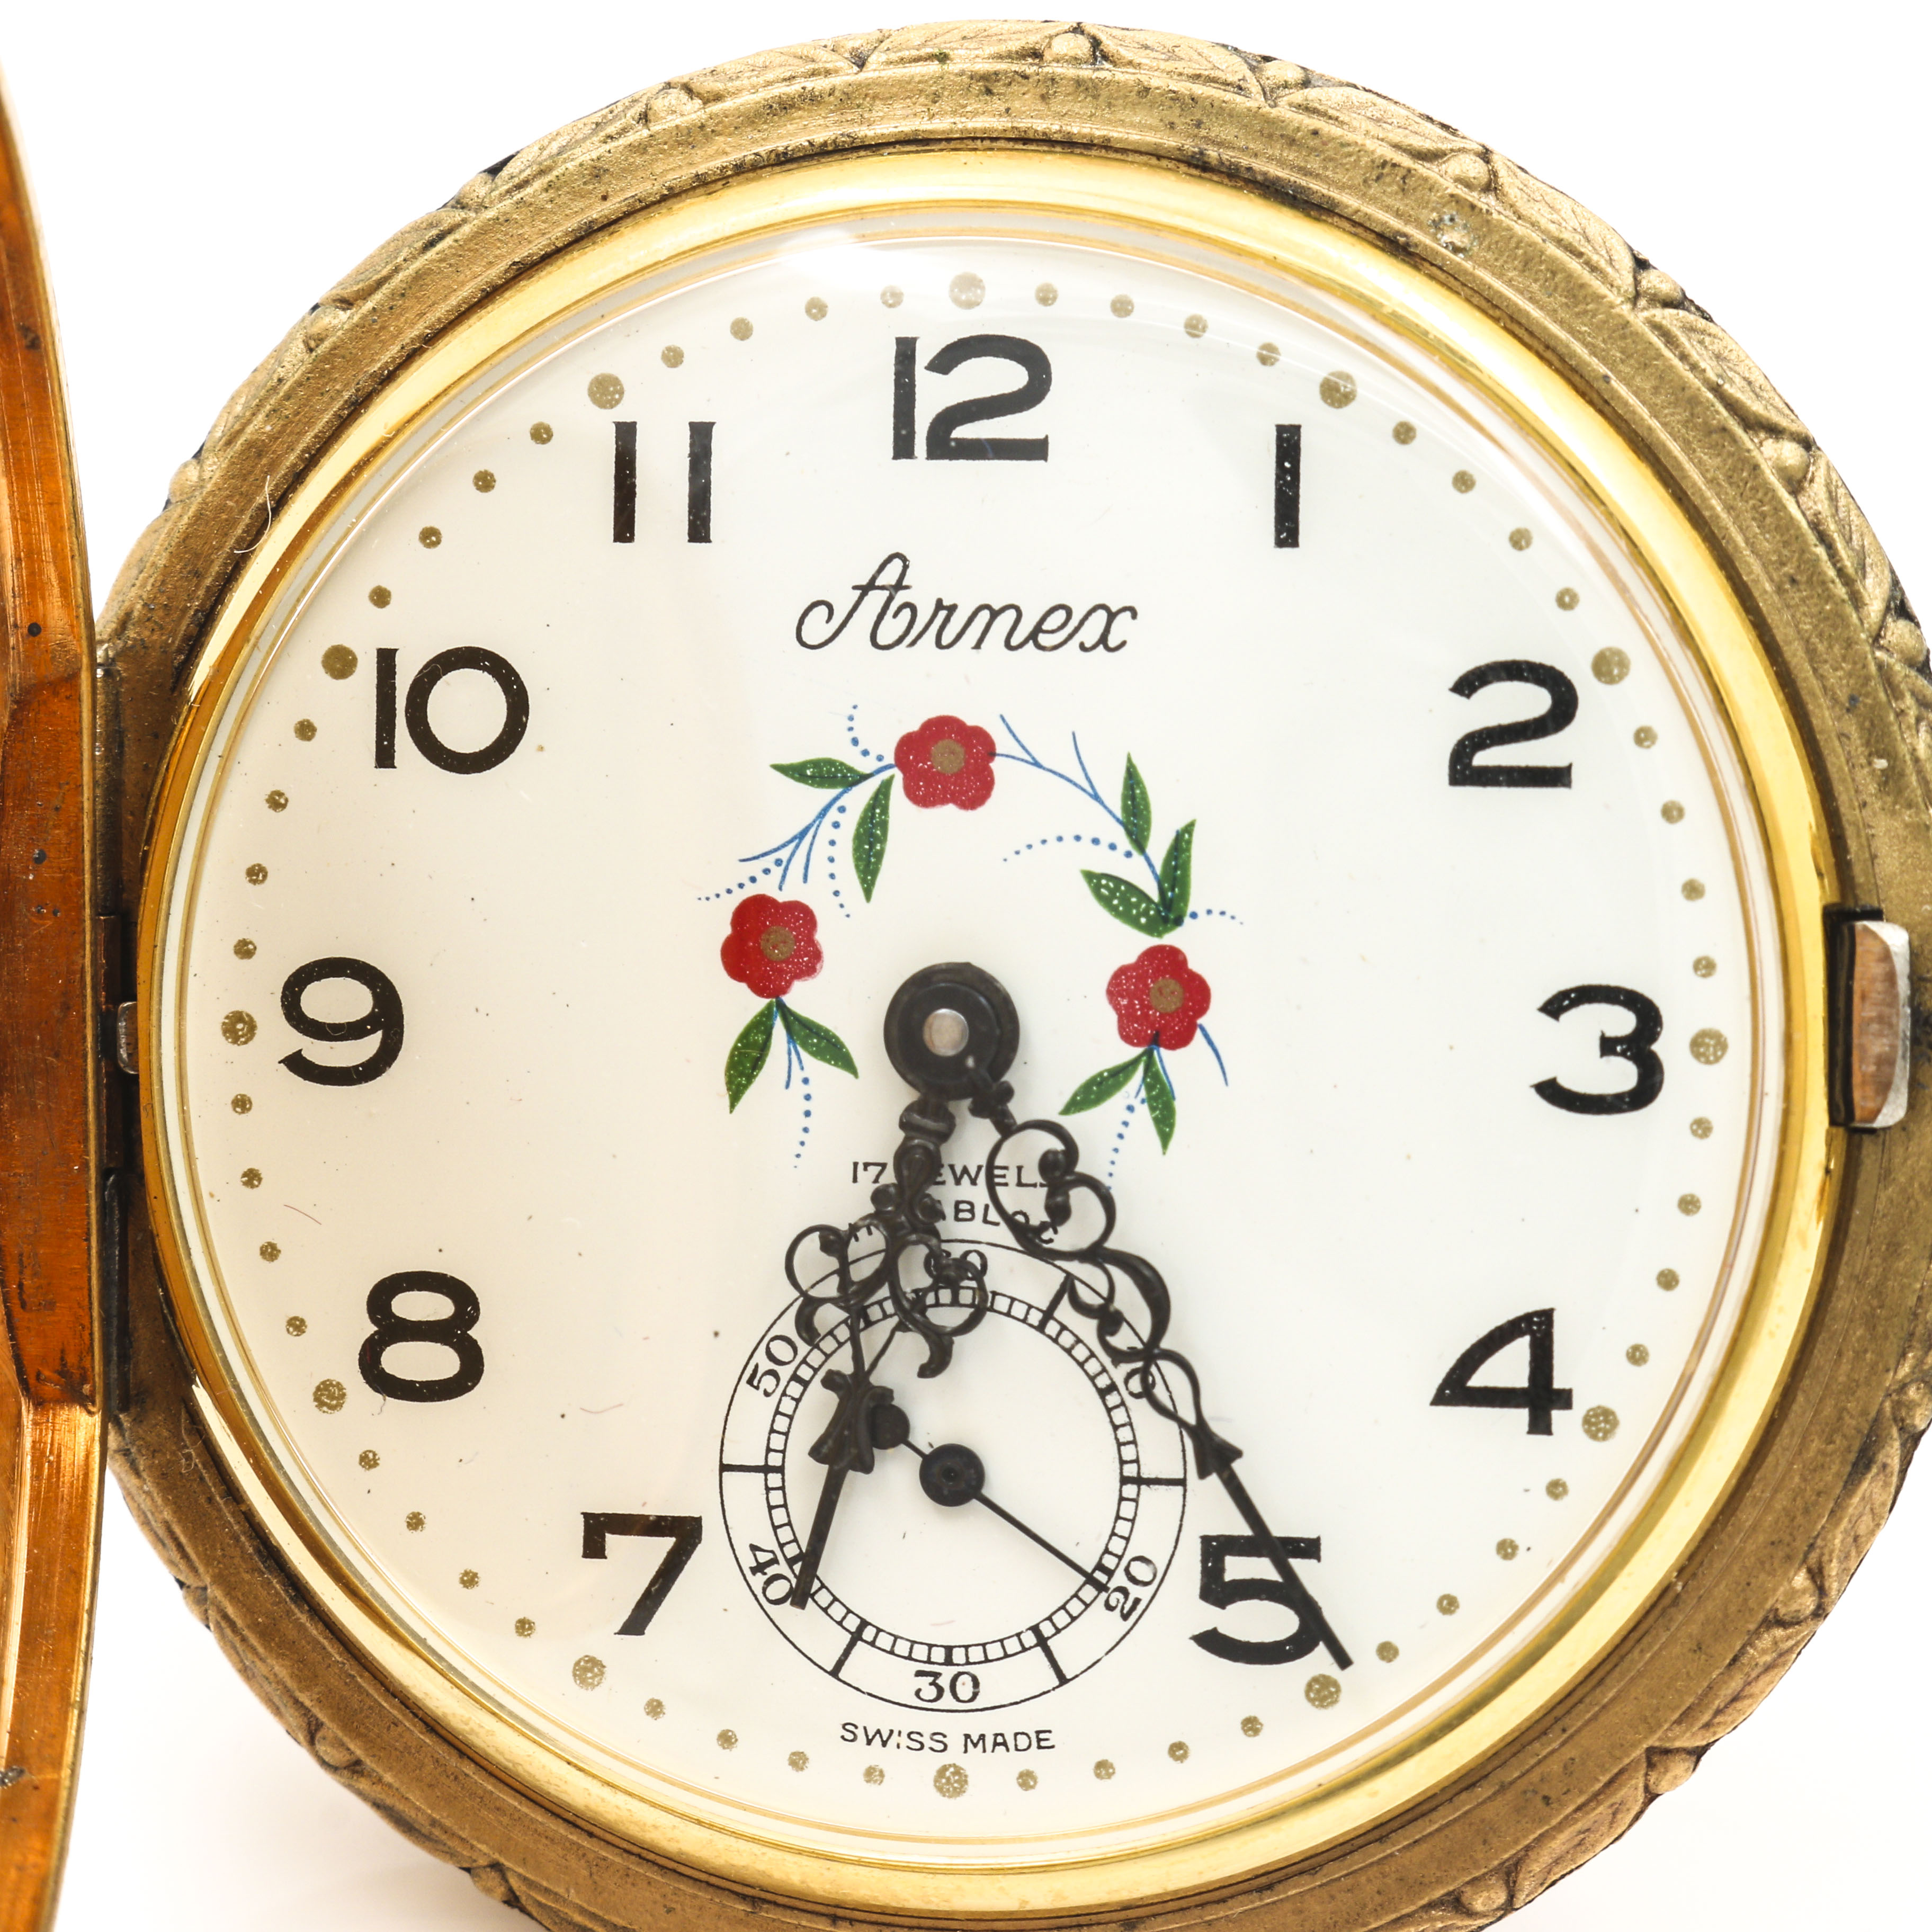 arnex 17 jewels incabloc pocket watch with 60 hr dial